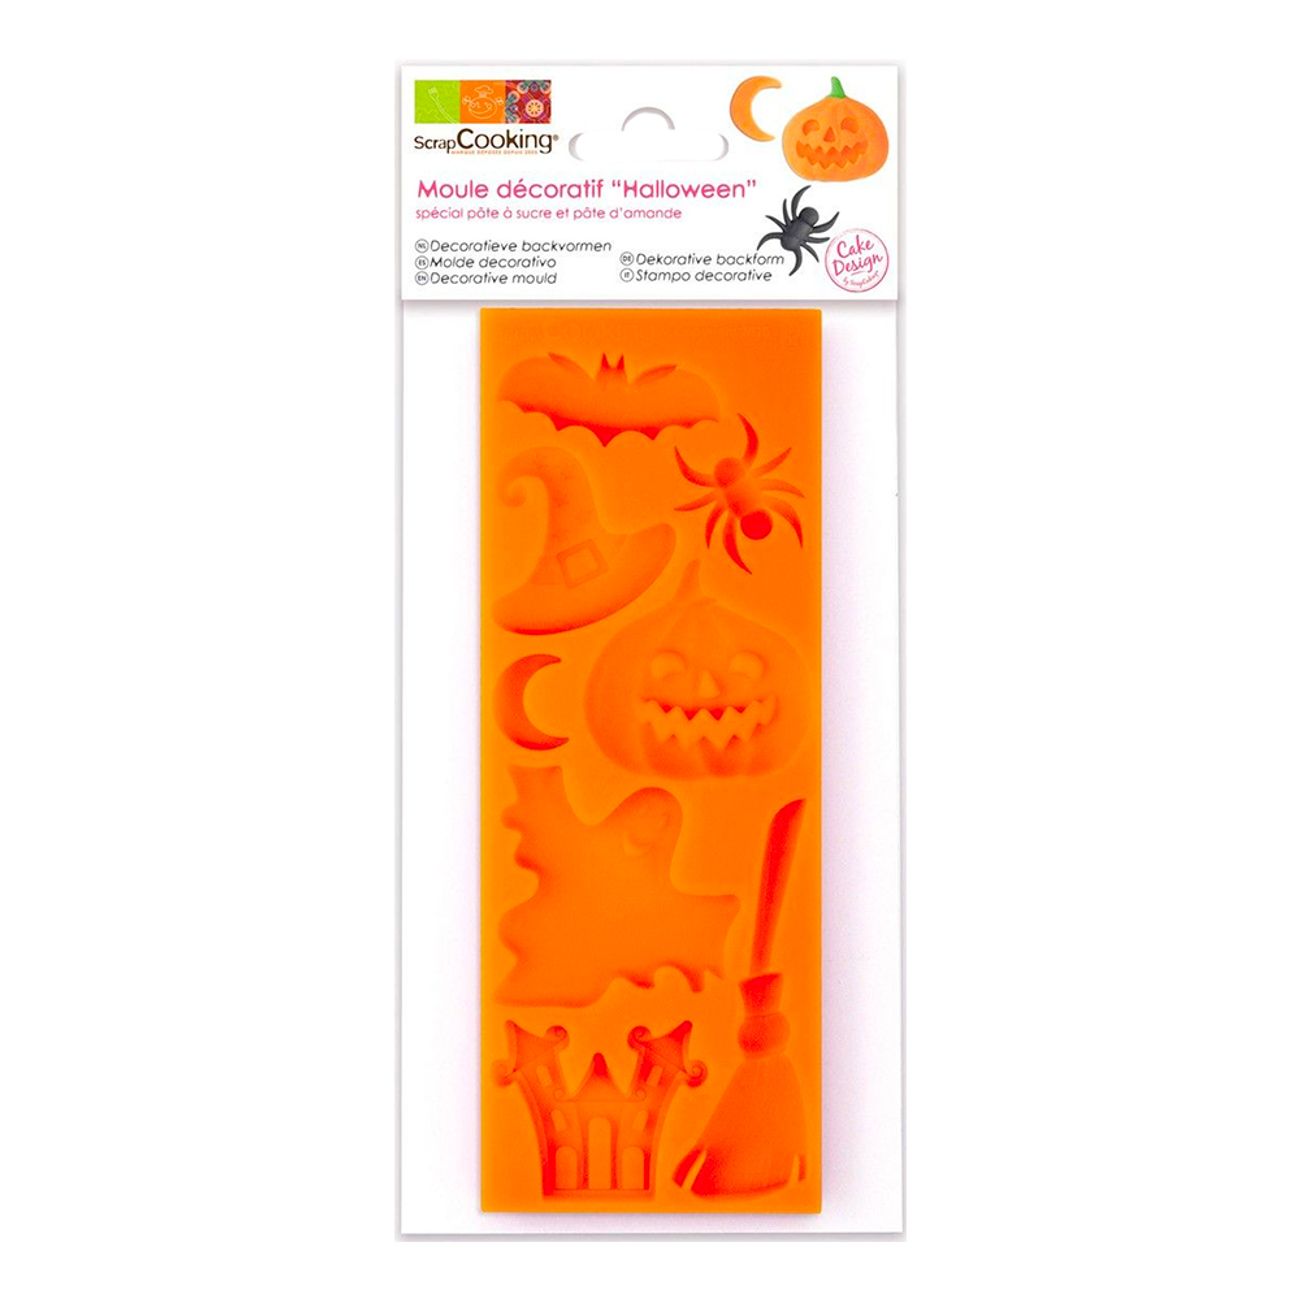 silikonform-halloweenfigurer-78604-1